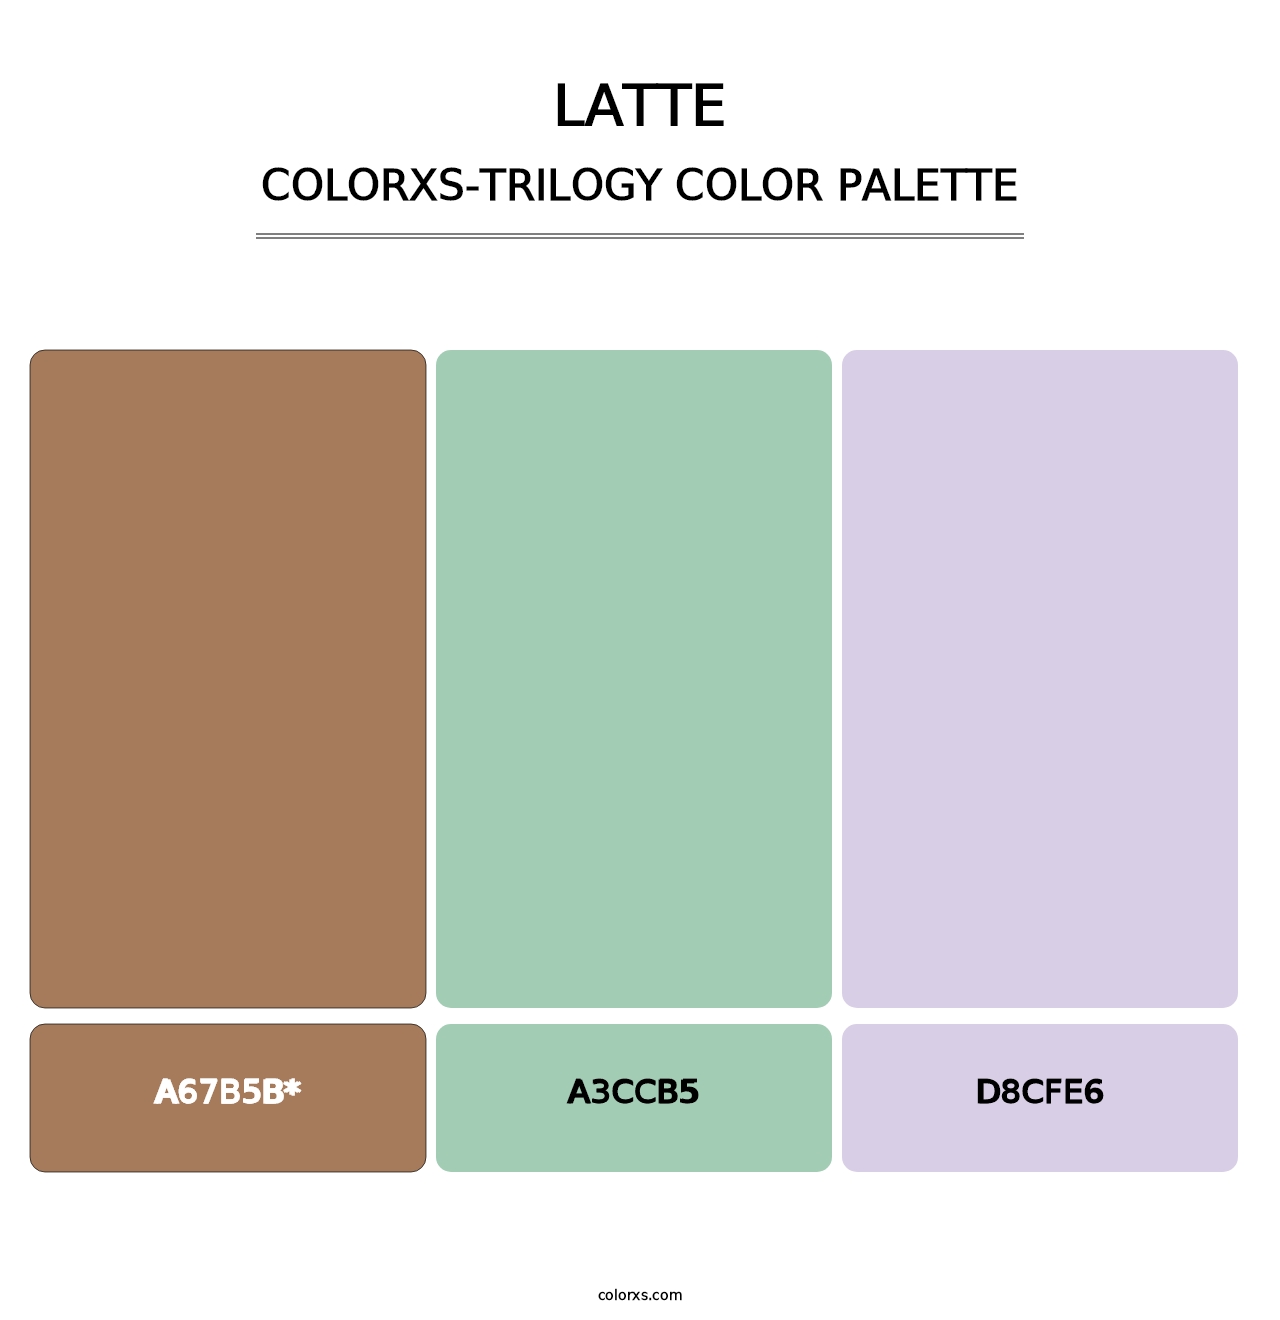 Latte - Colorxs Trilogy Palette